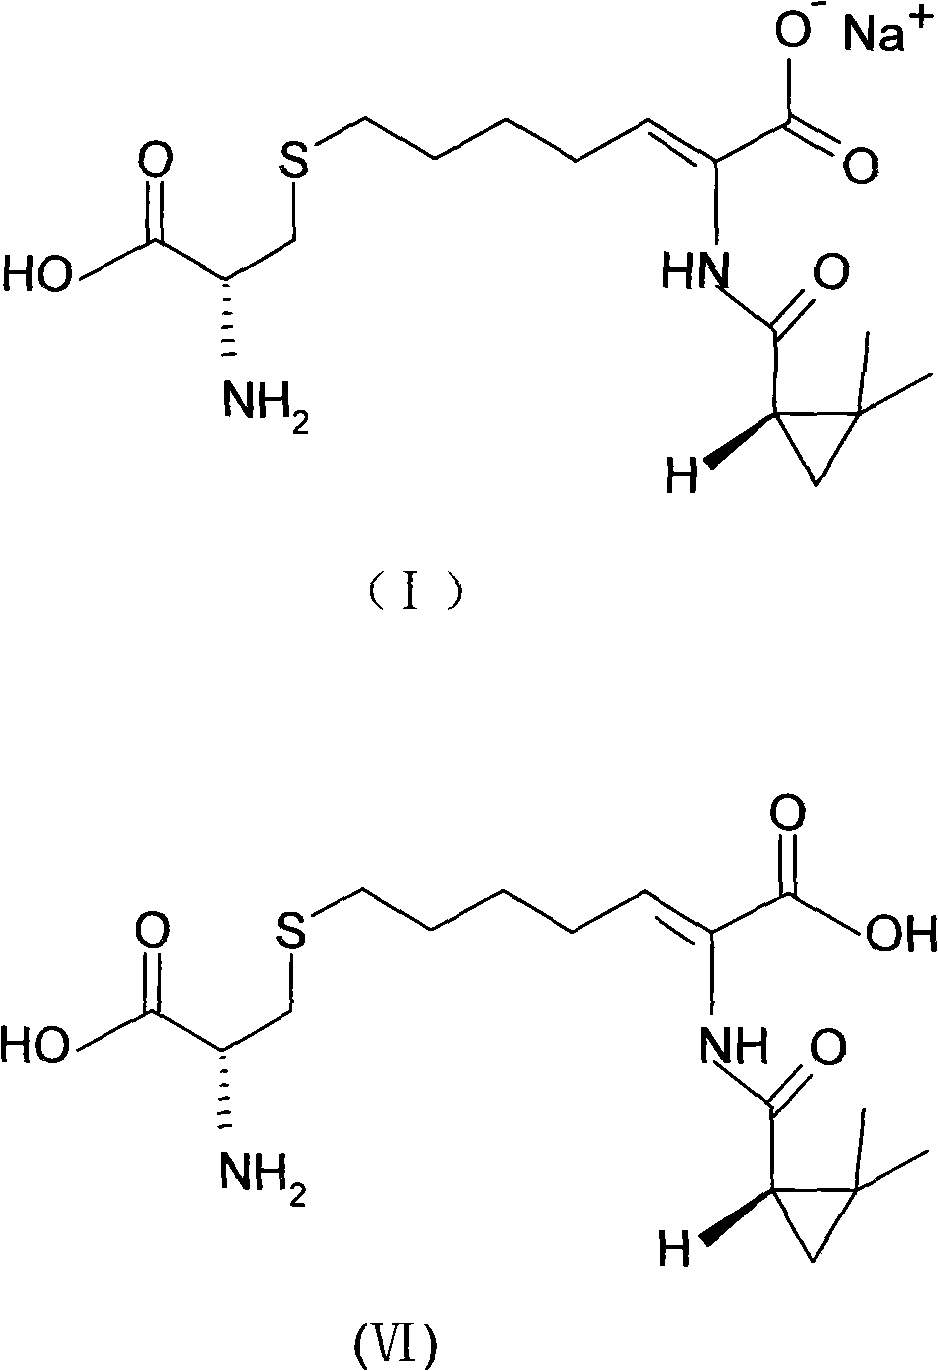 Process for preparing cilastatin sodium